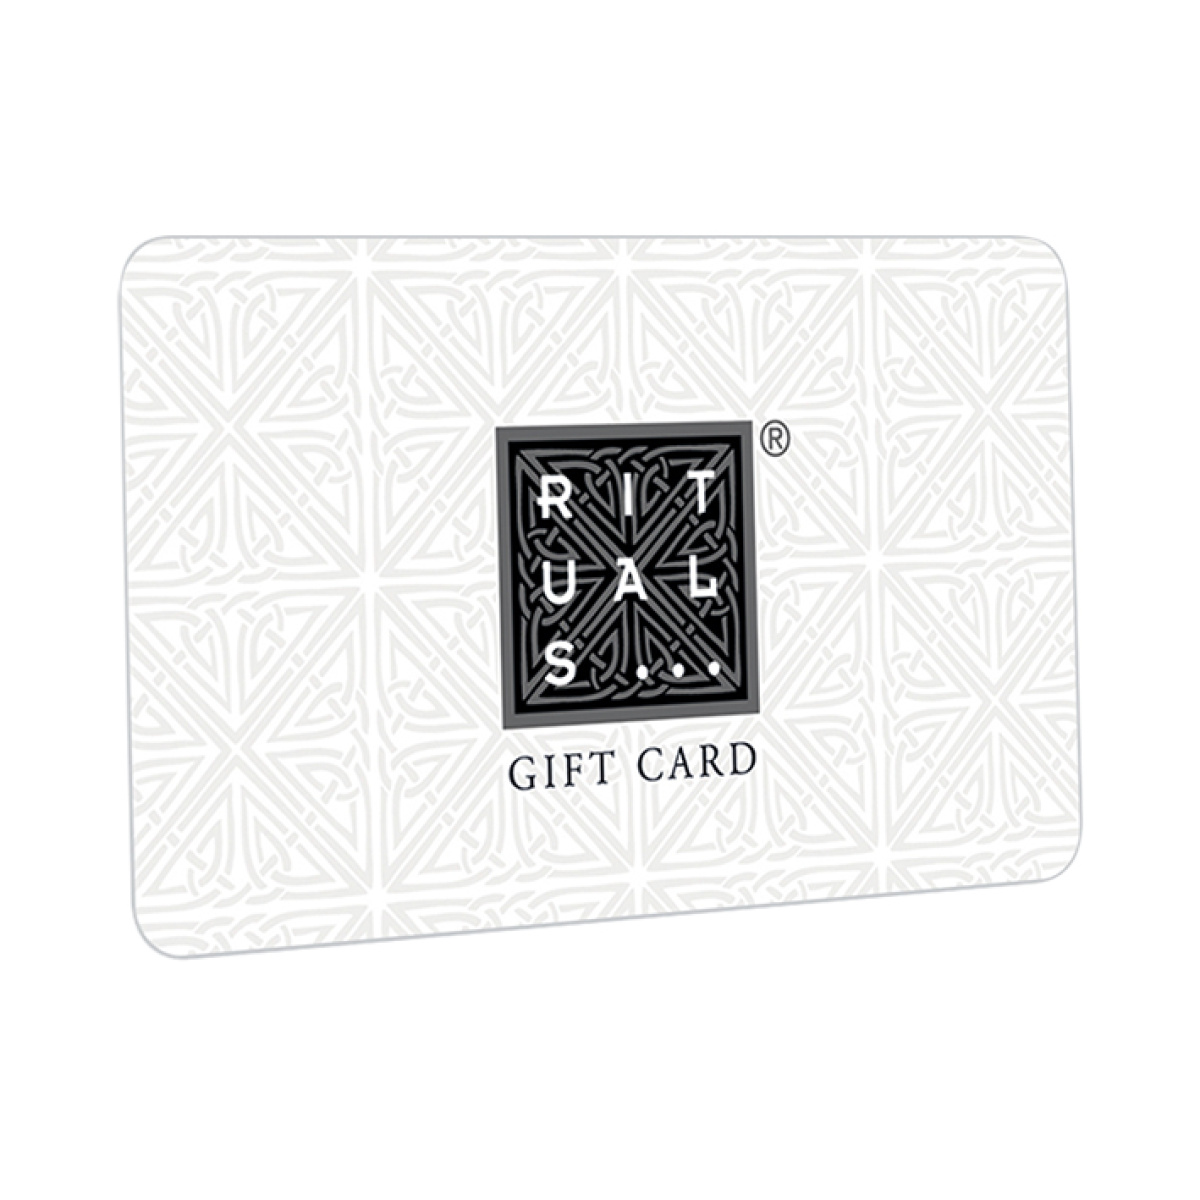  cheque regalo digital españa rituals tarjeta regalo digital rituals